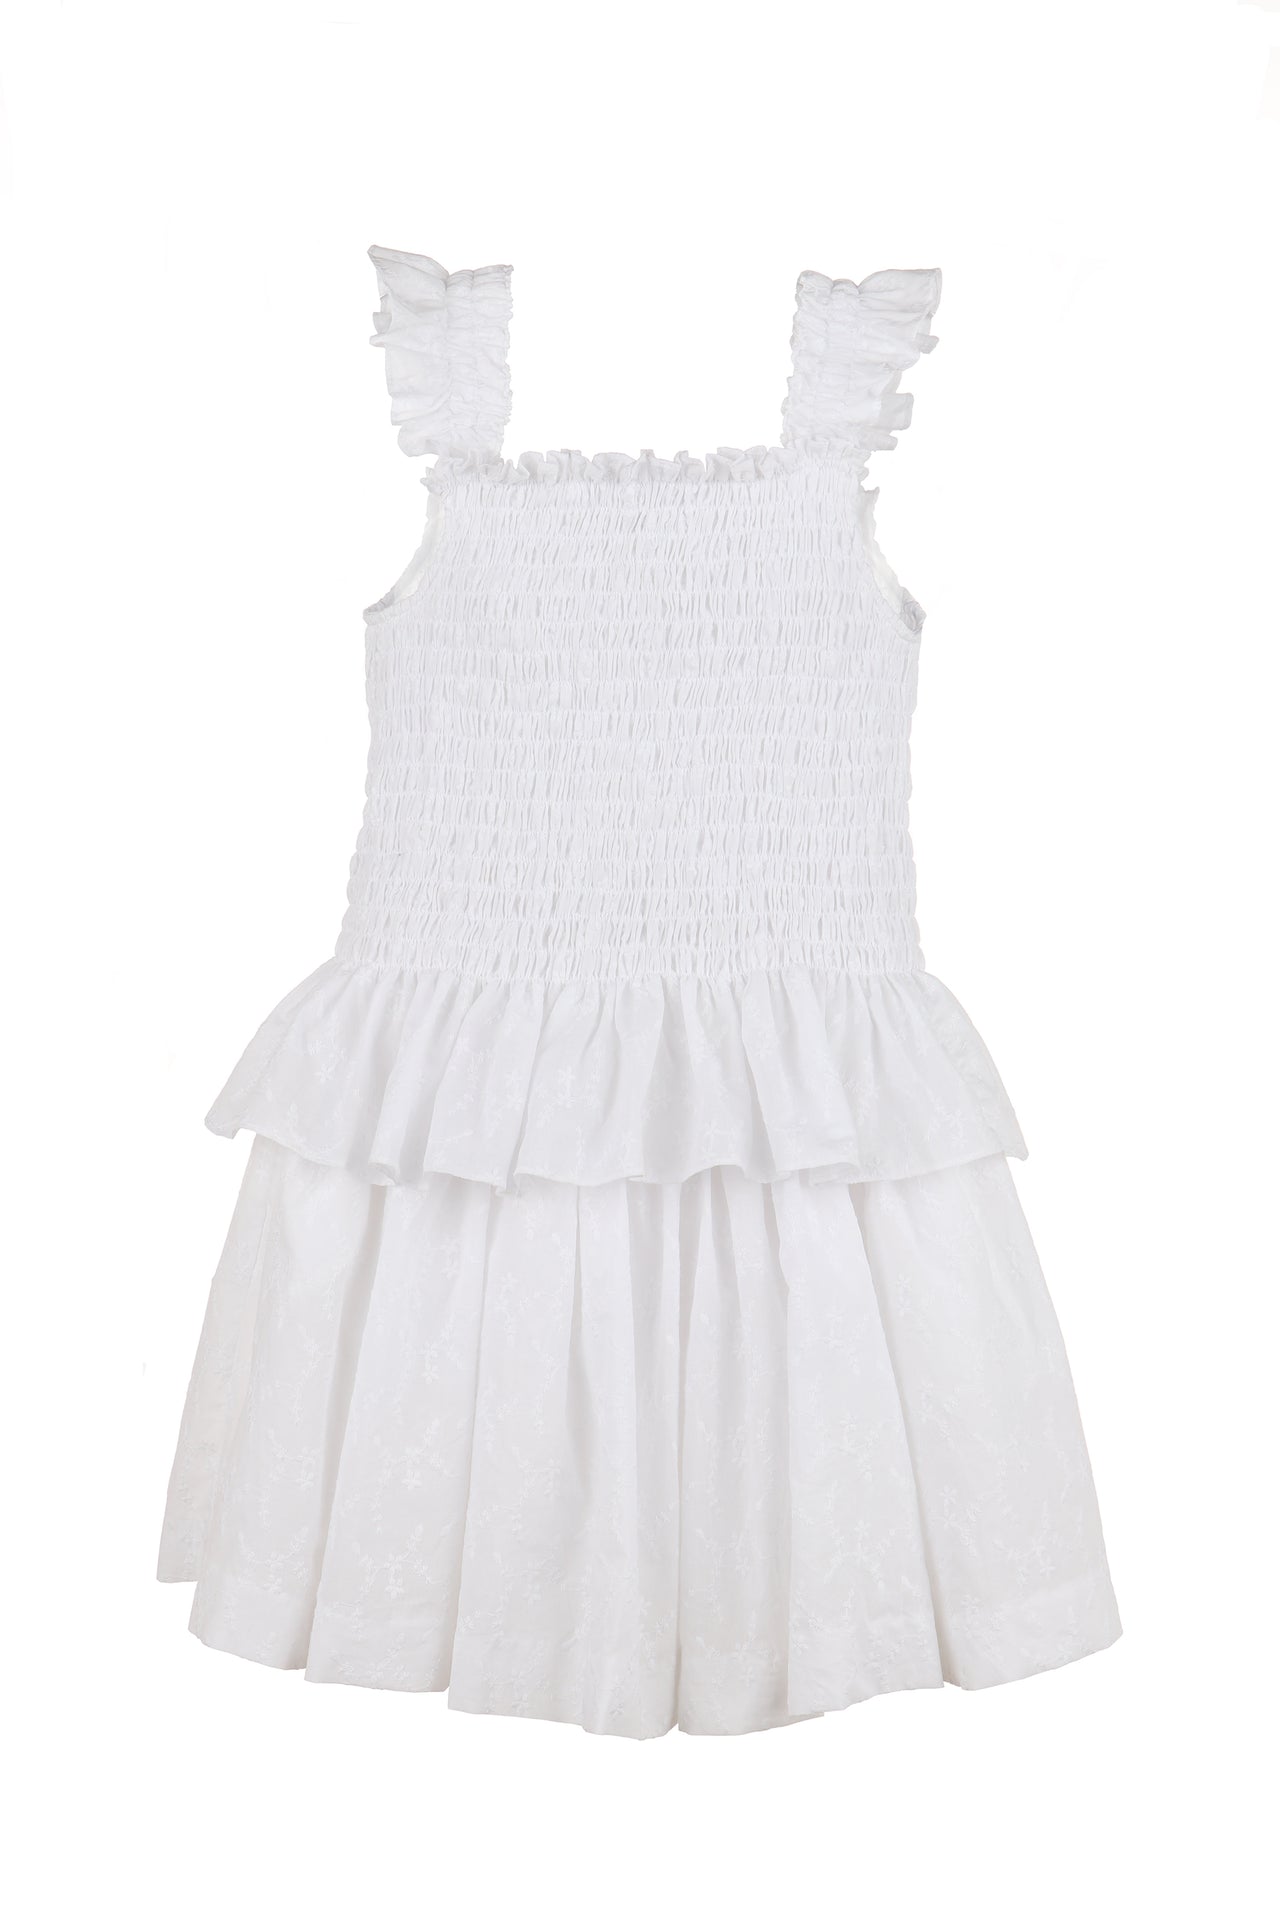 Gabby 2pc White Skirt Set Smocked Top 1802